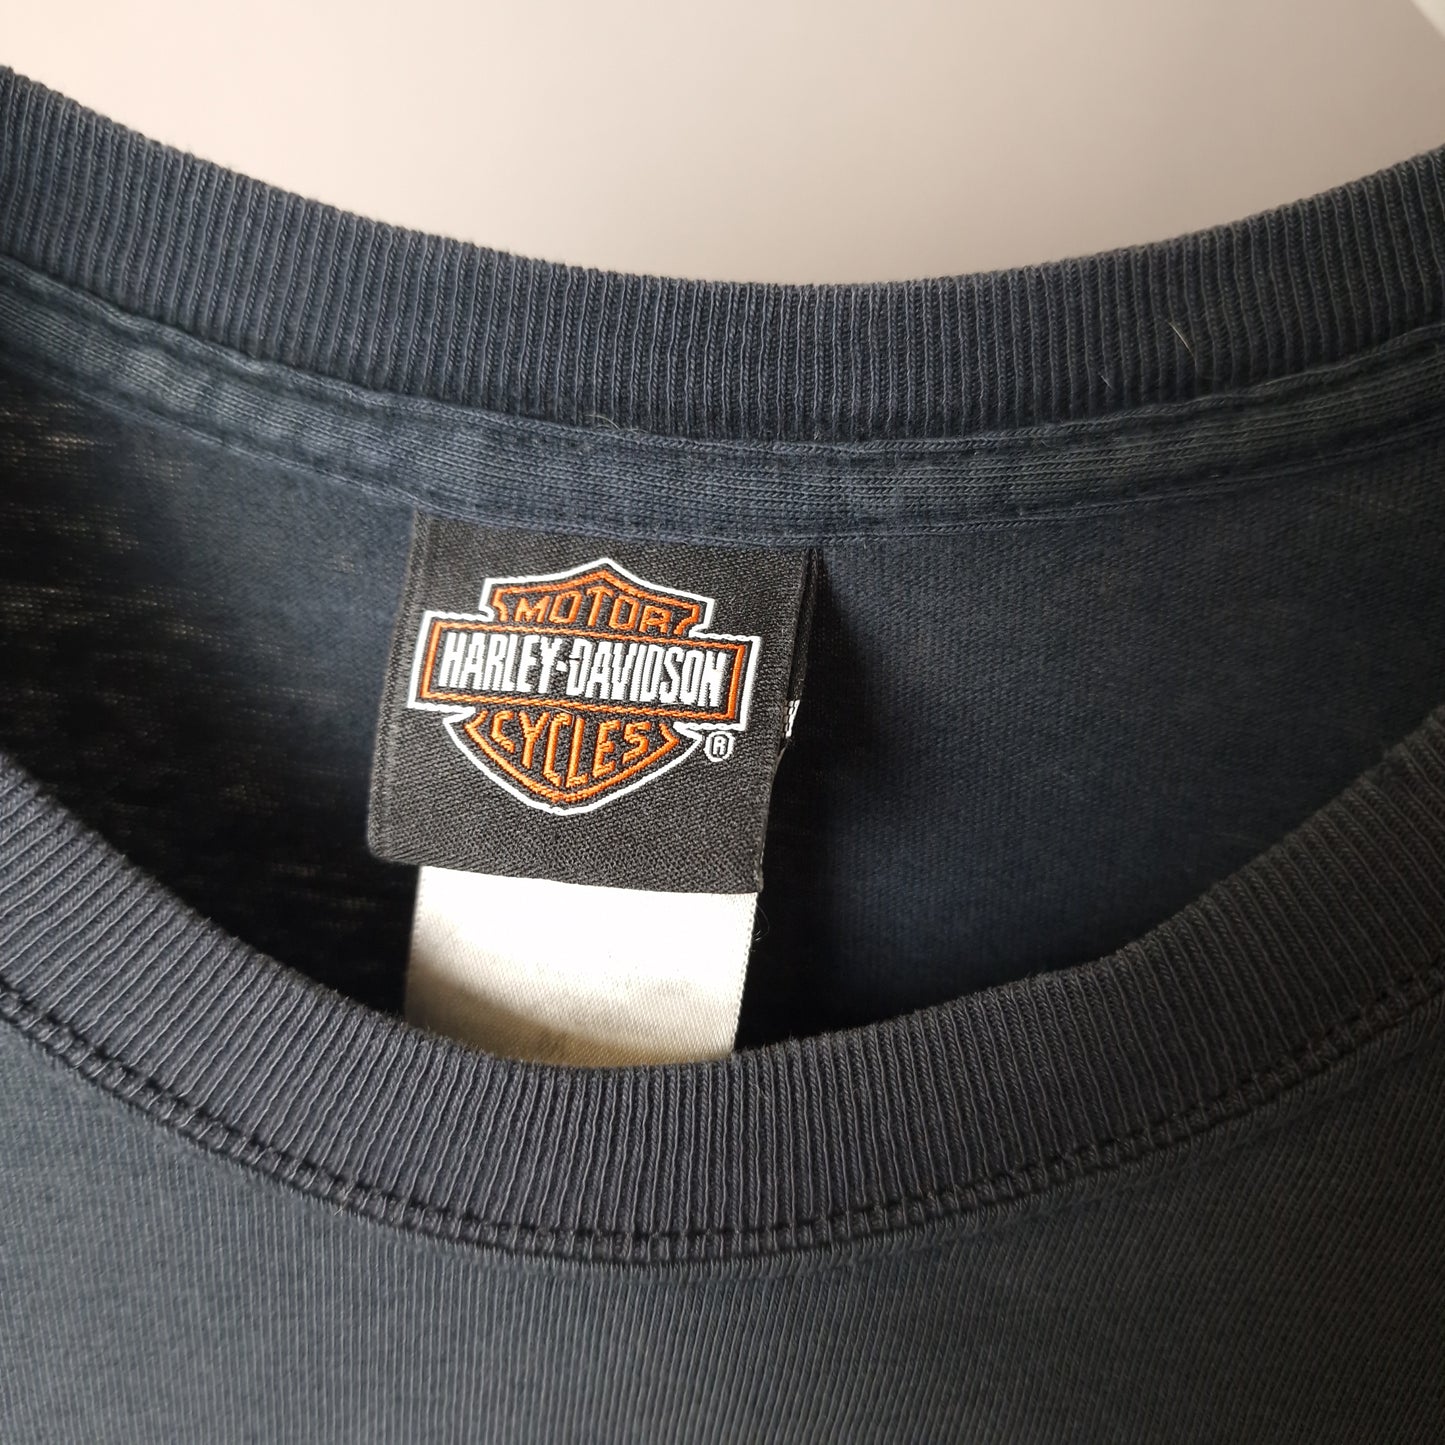 Vintage Harley Davidson faded t-shirt in black - medium